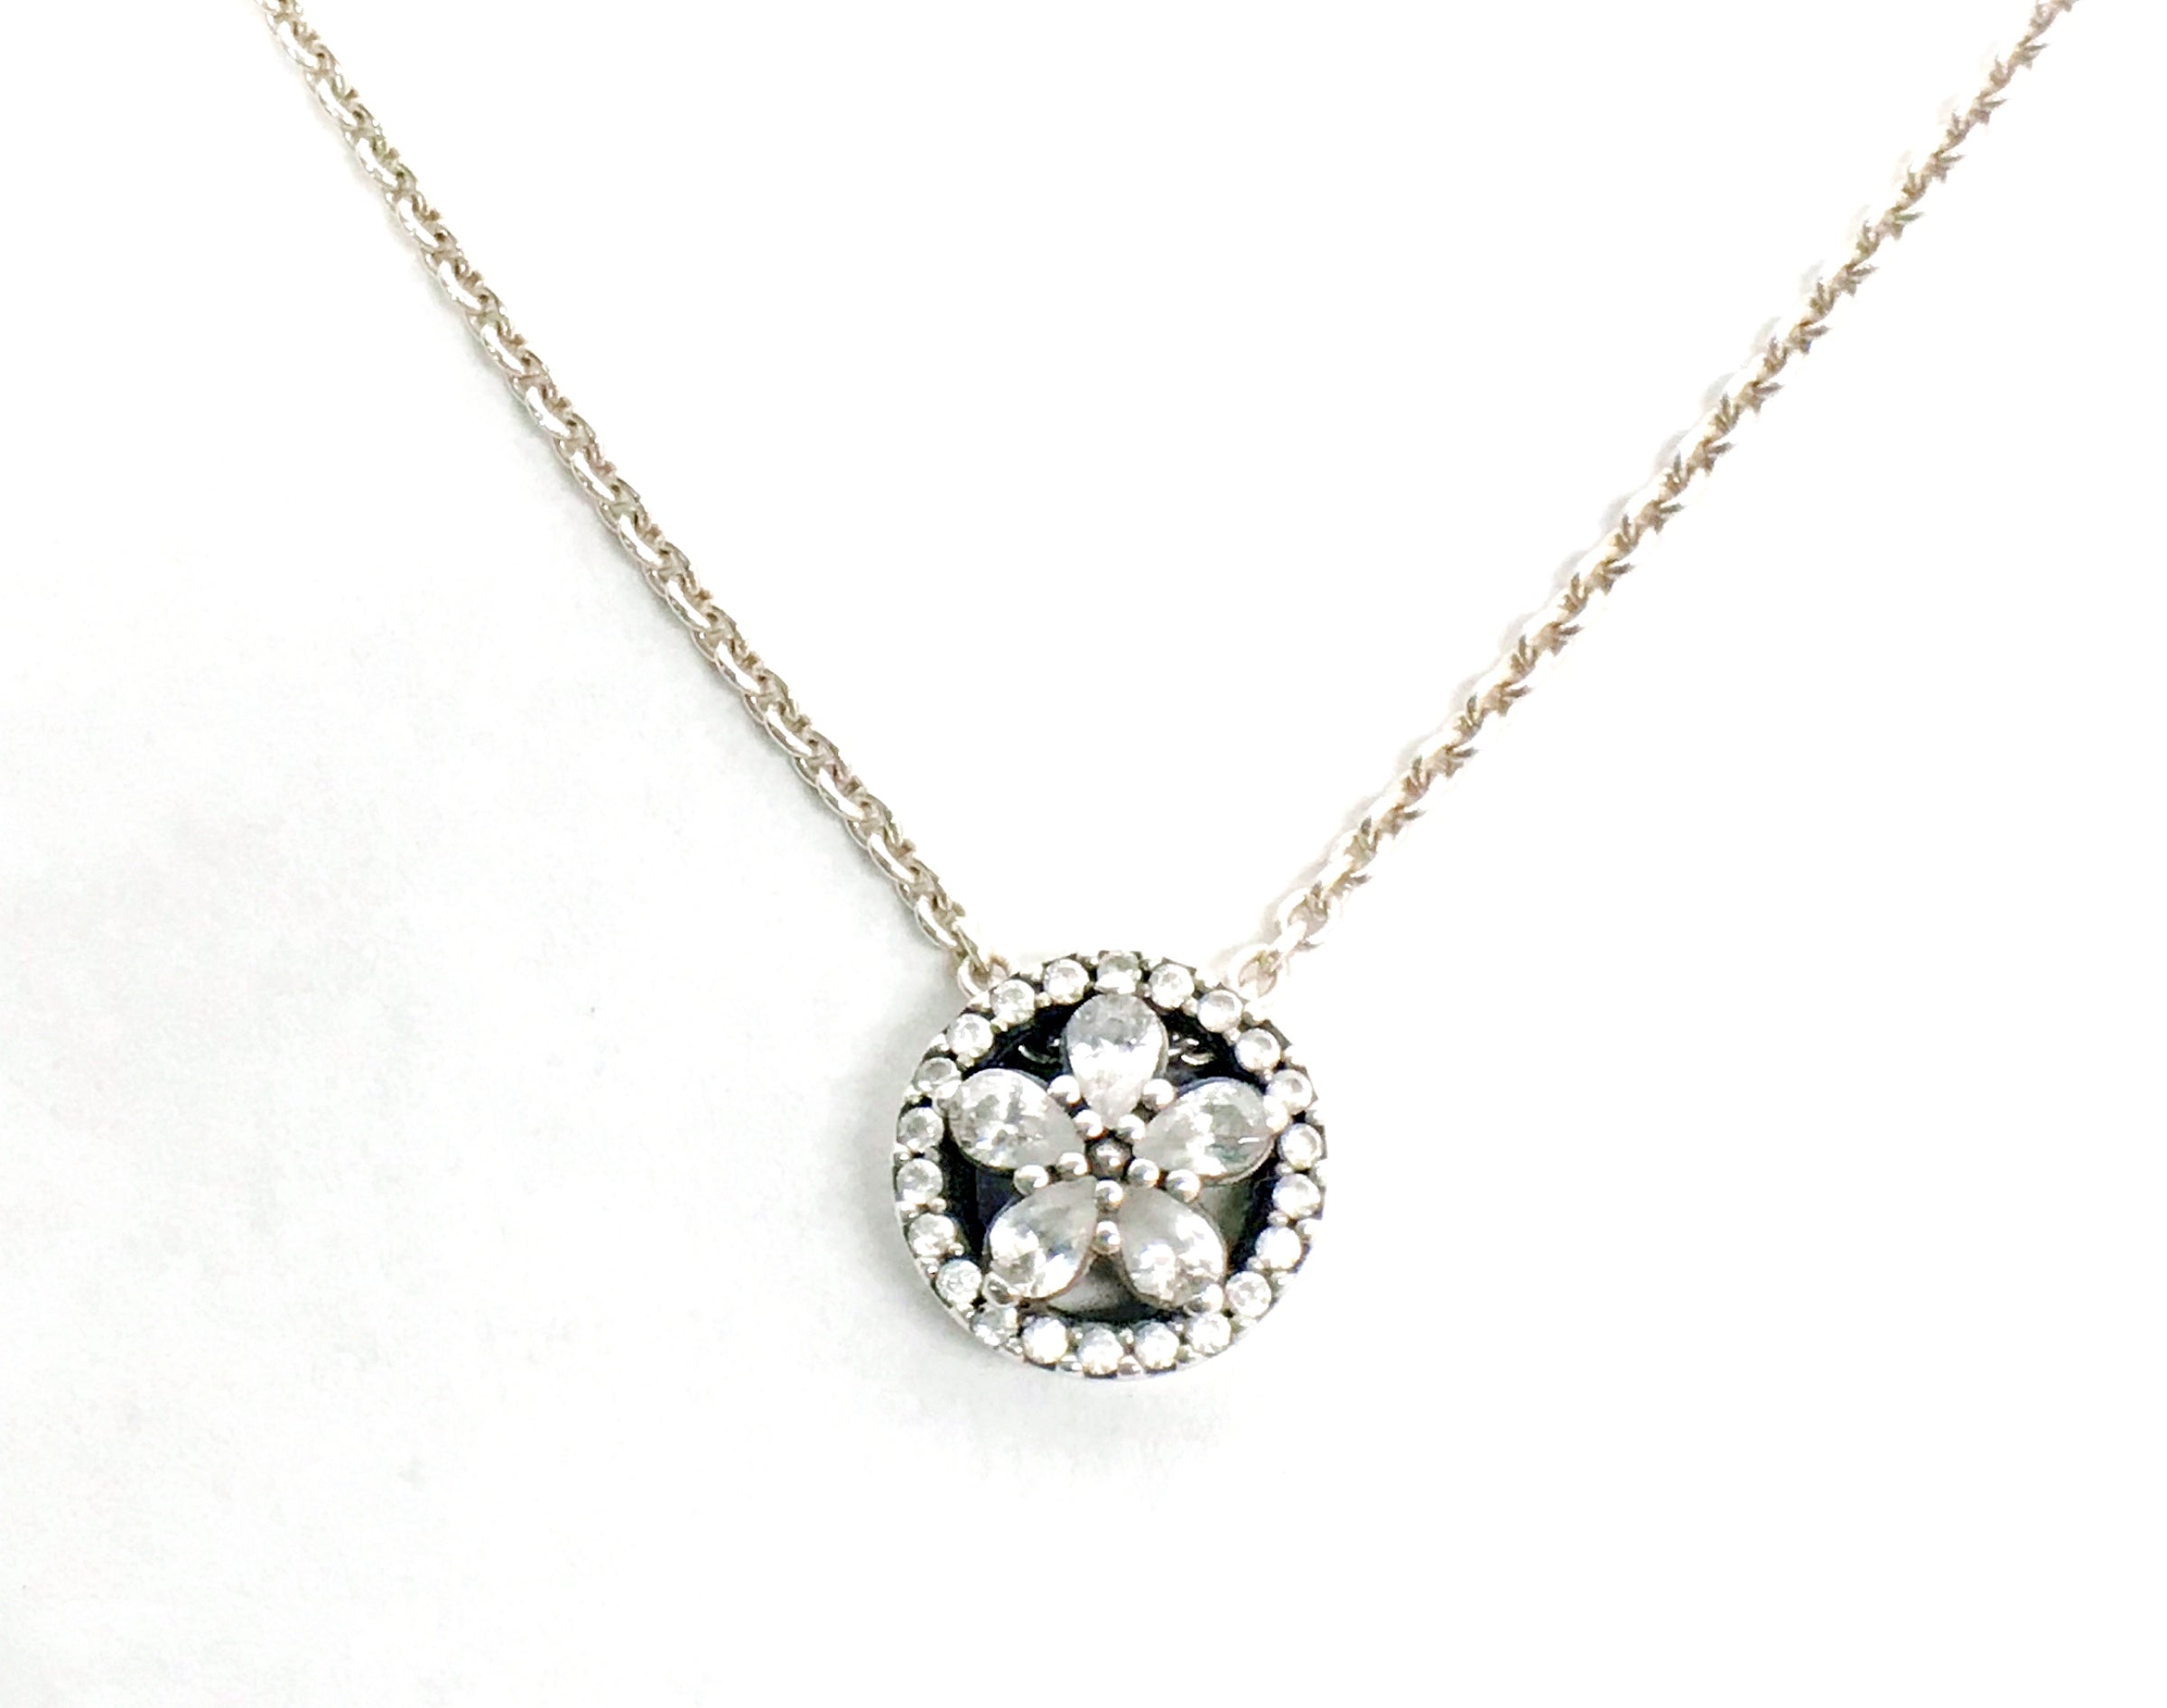 Pandora Sparkling Snowflake Collier CZ Necklace | Cz necklace, Necklace,  Pandora crown